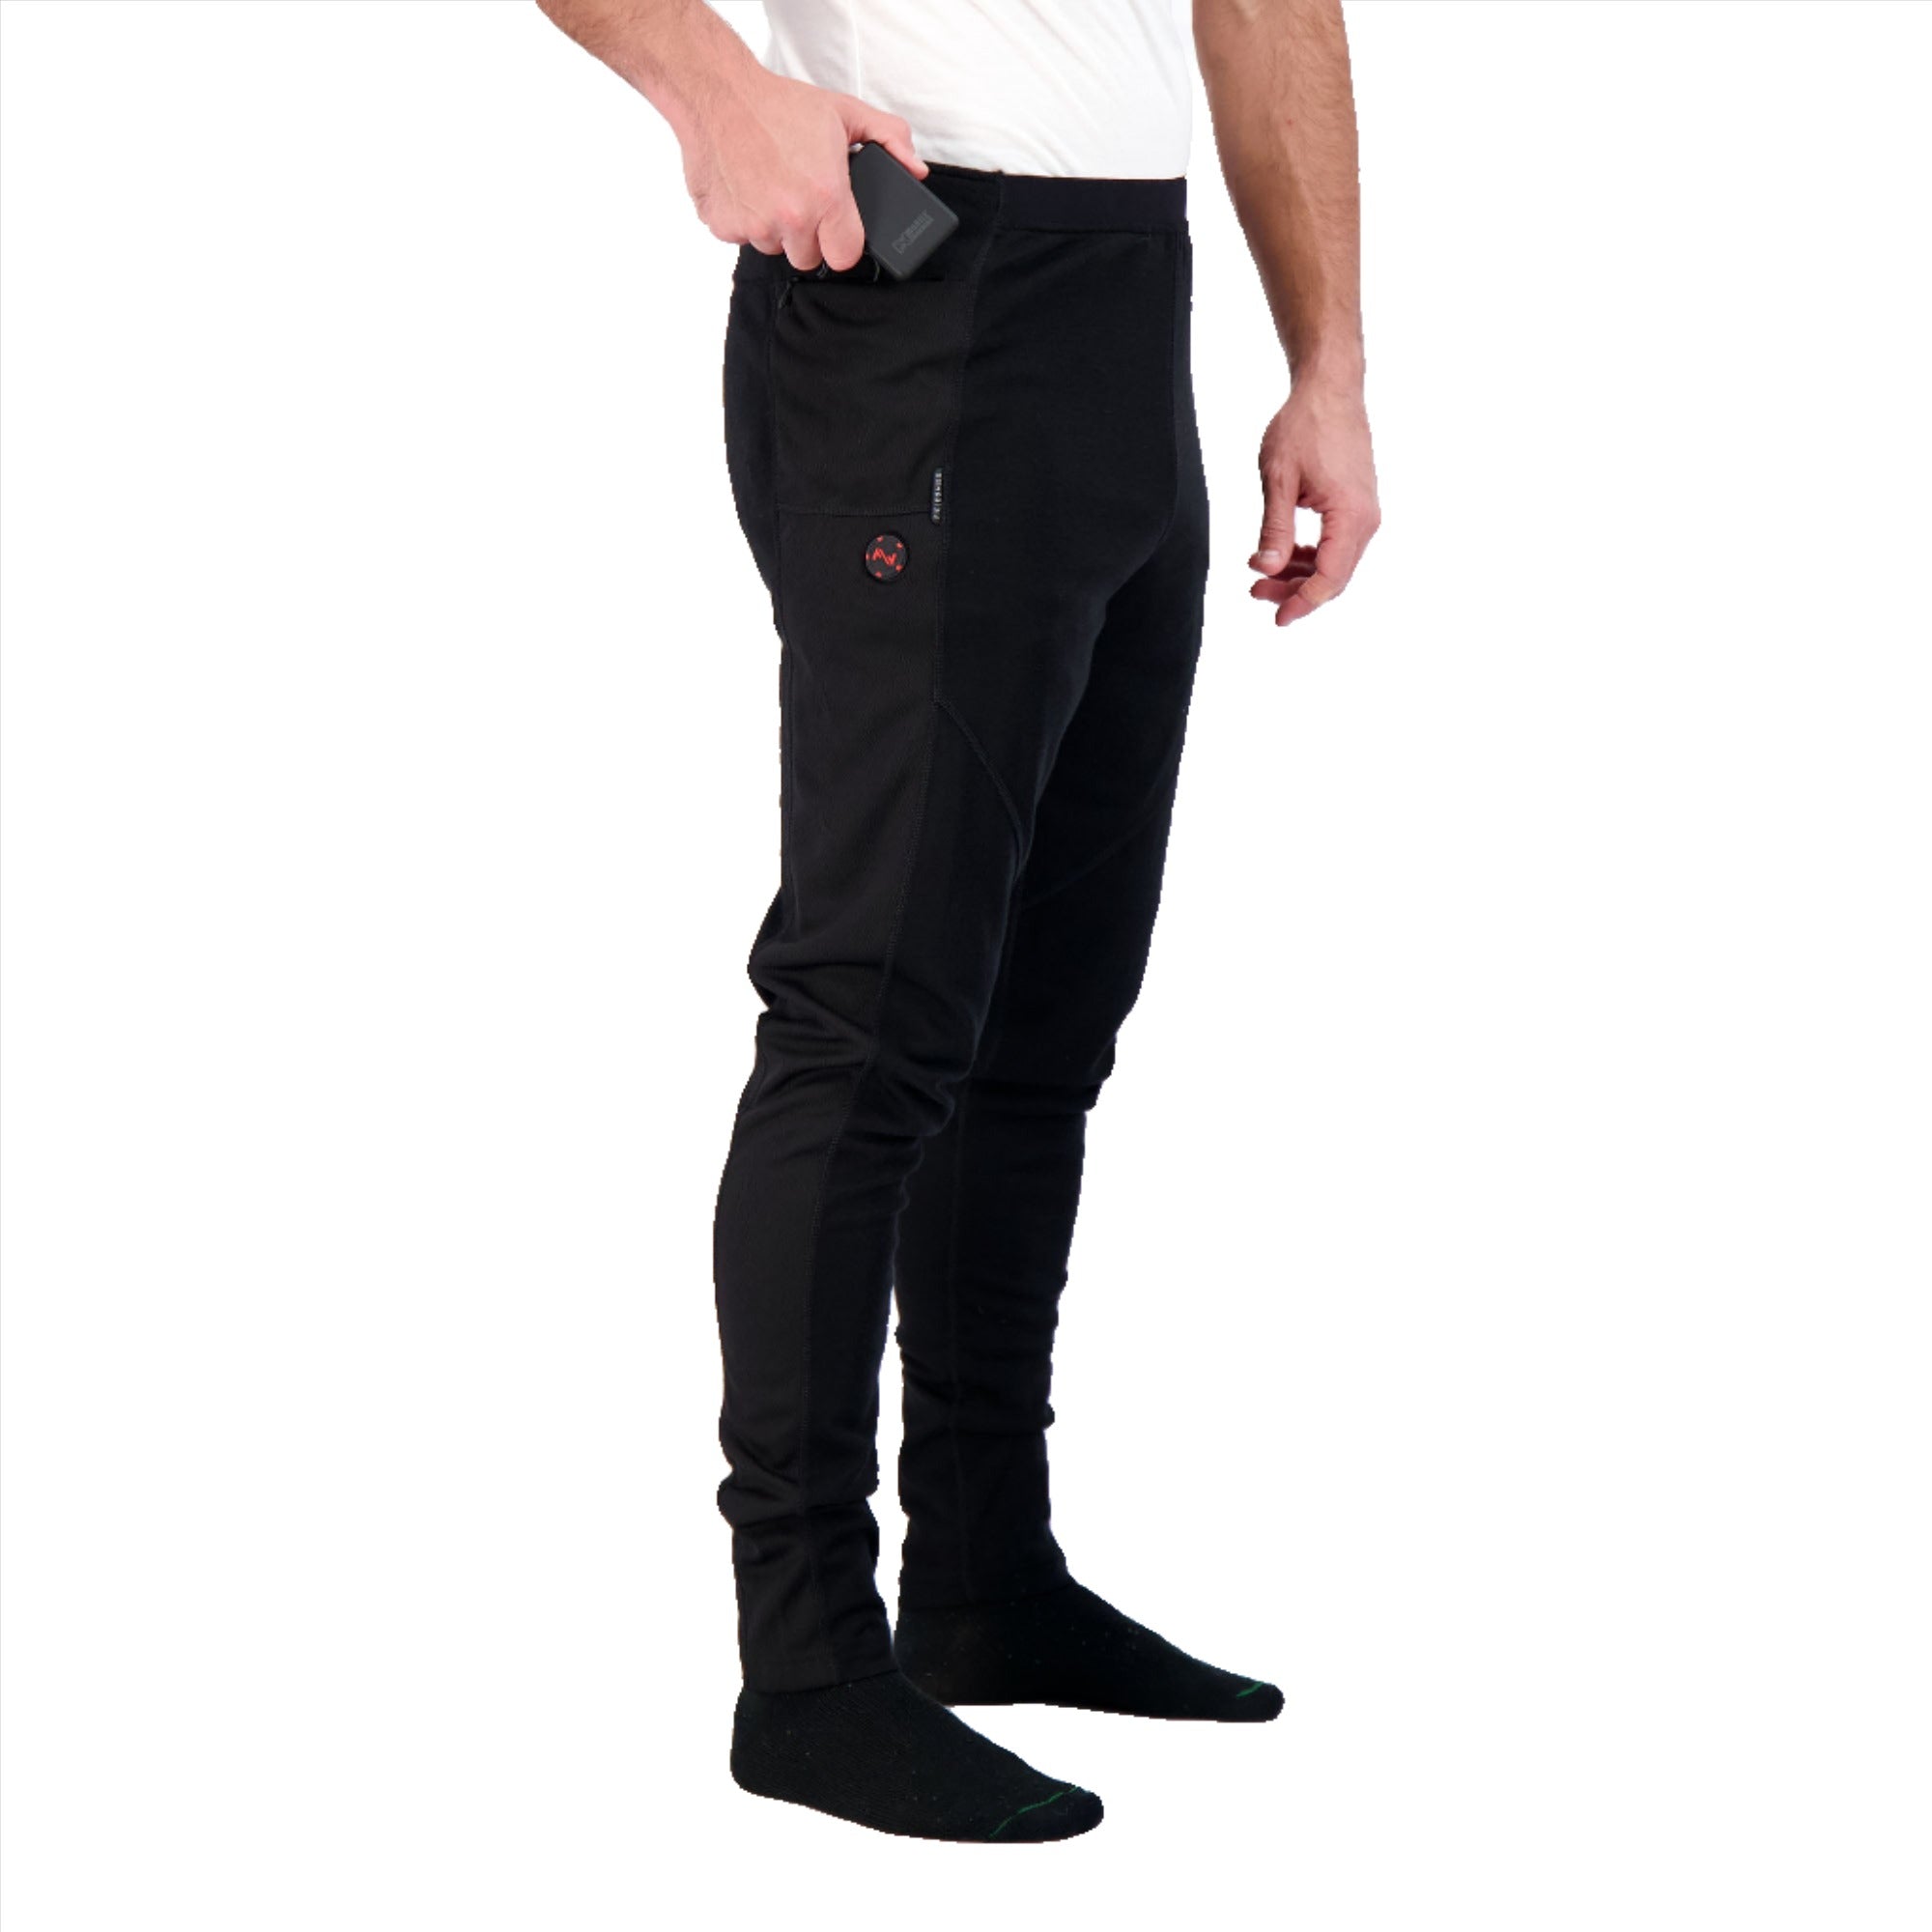 Men's Thermal Long Johns Thick Cotton Pants Leggings Home Wear Slim Soft  Pants